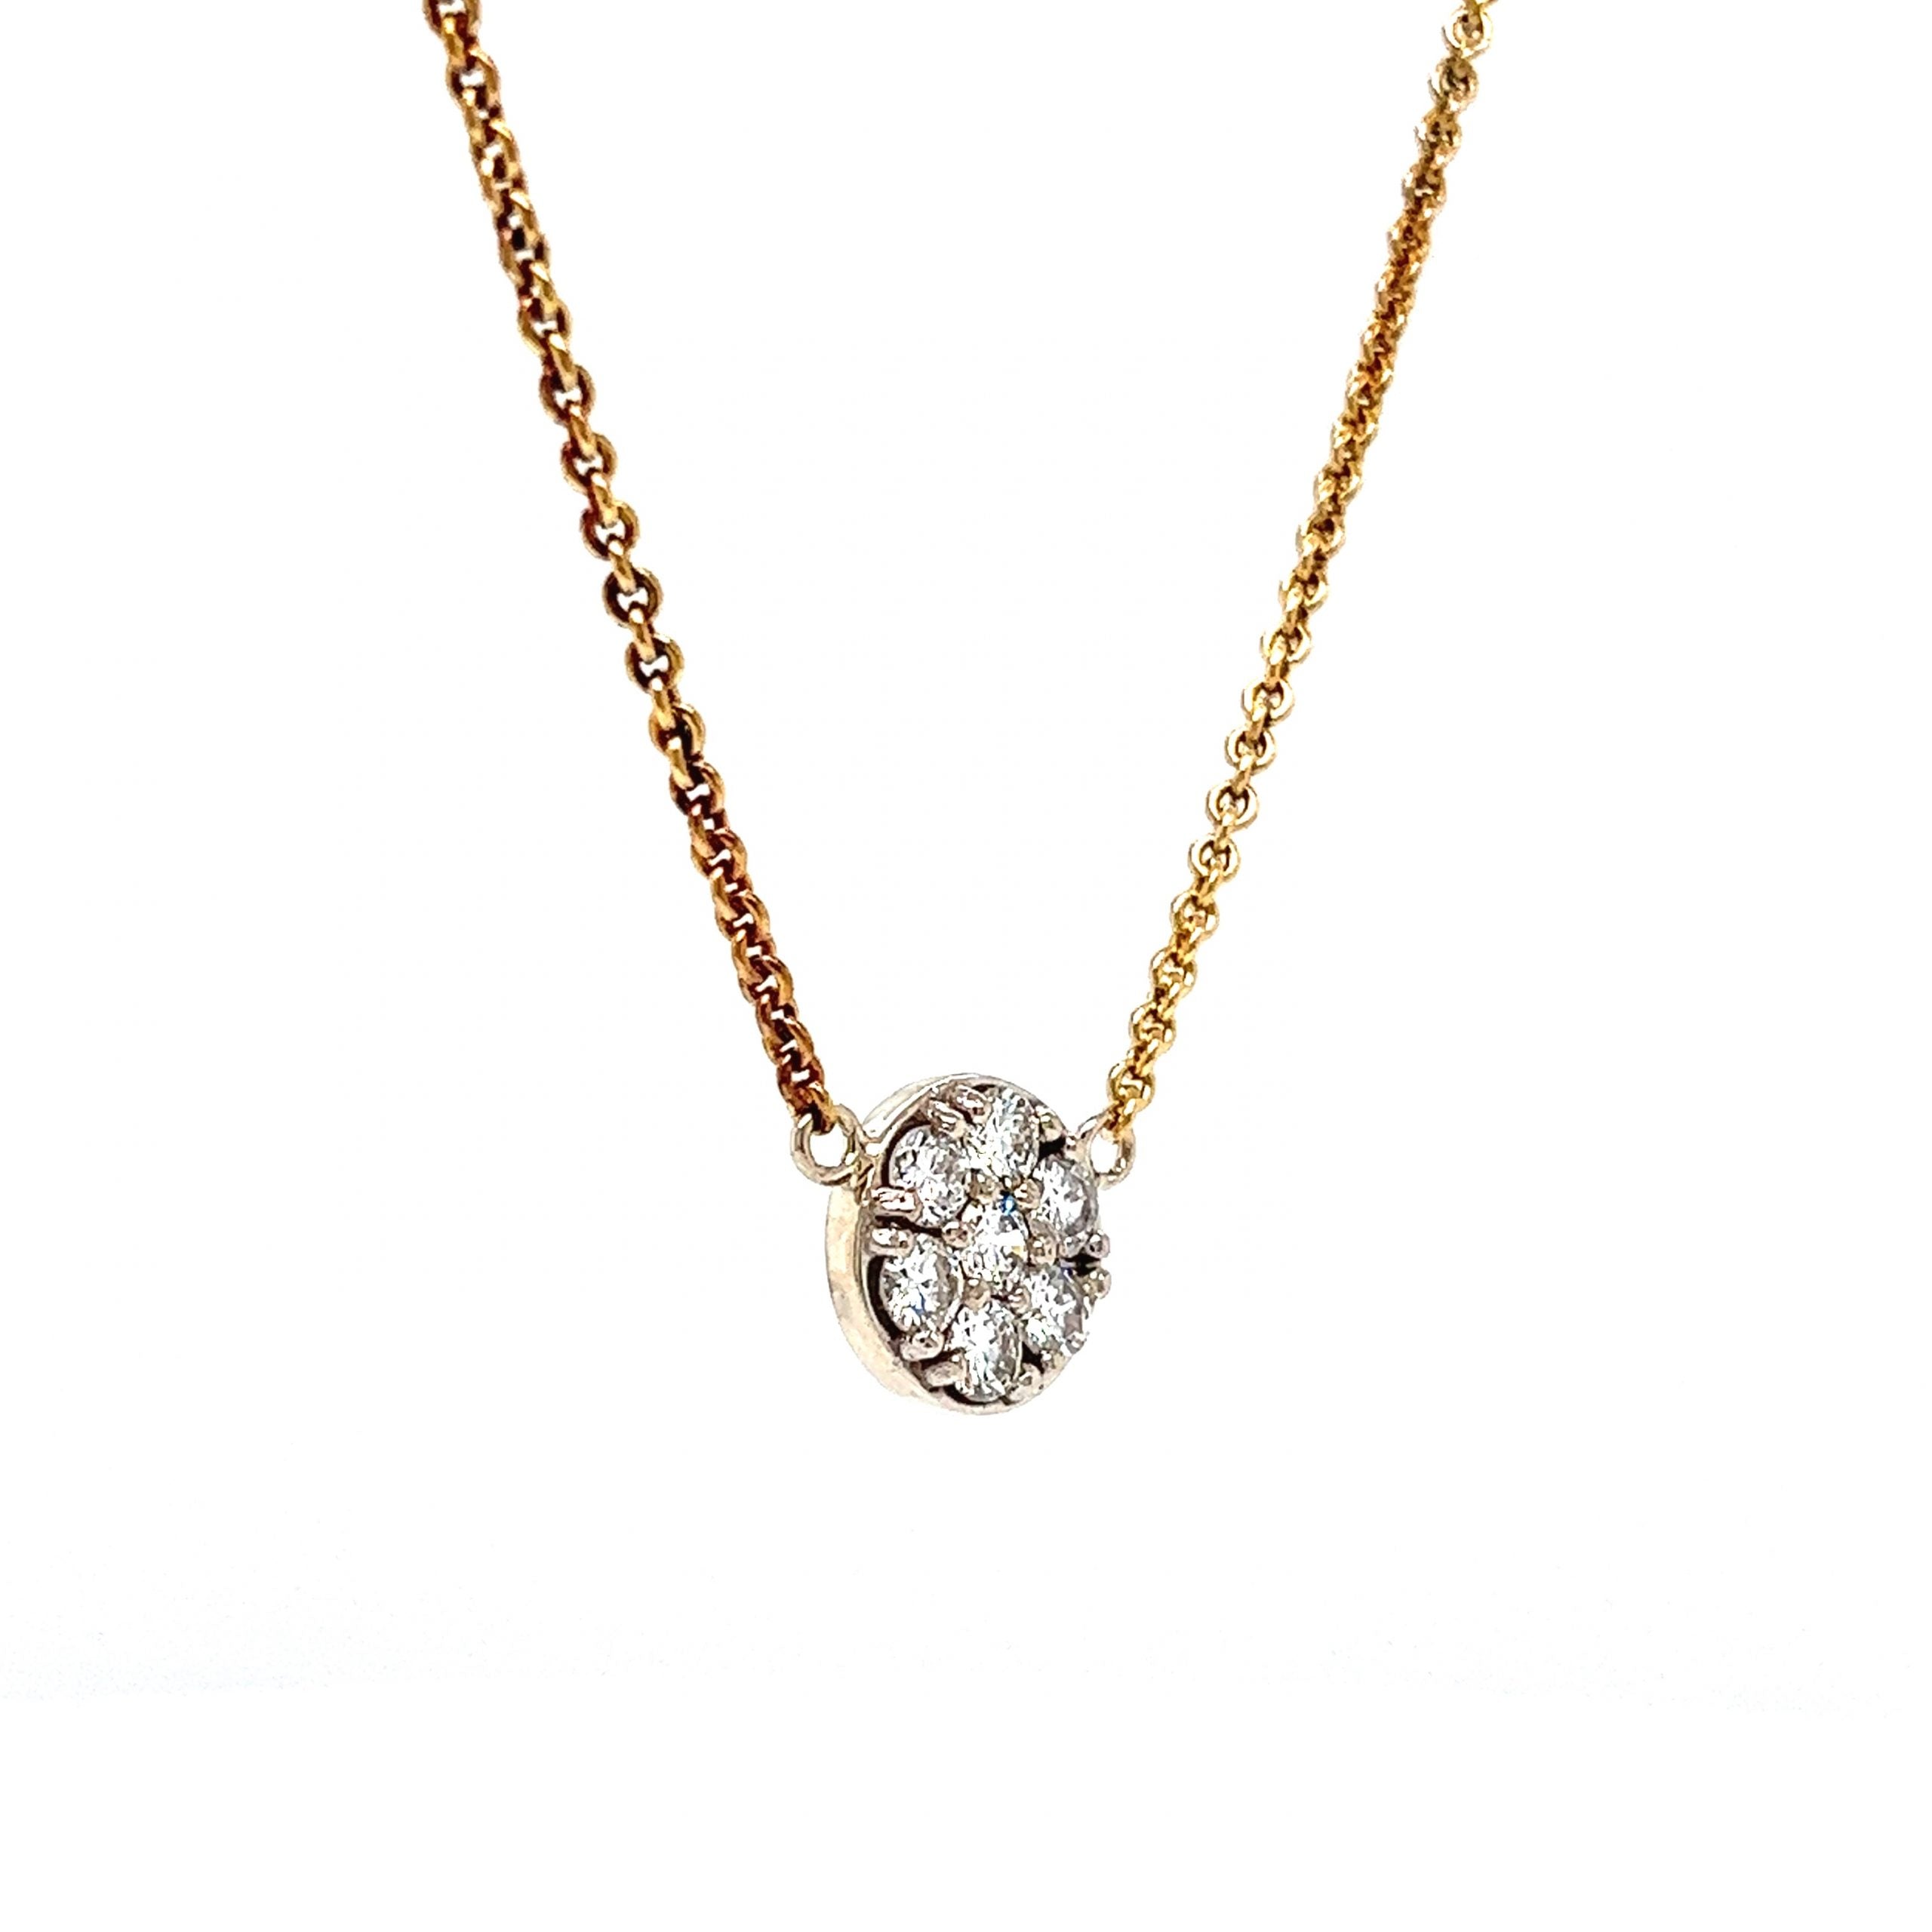 Marco Bicego Jaipur Delicati 18k Gold Diamond Necklace